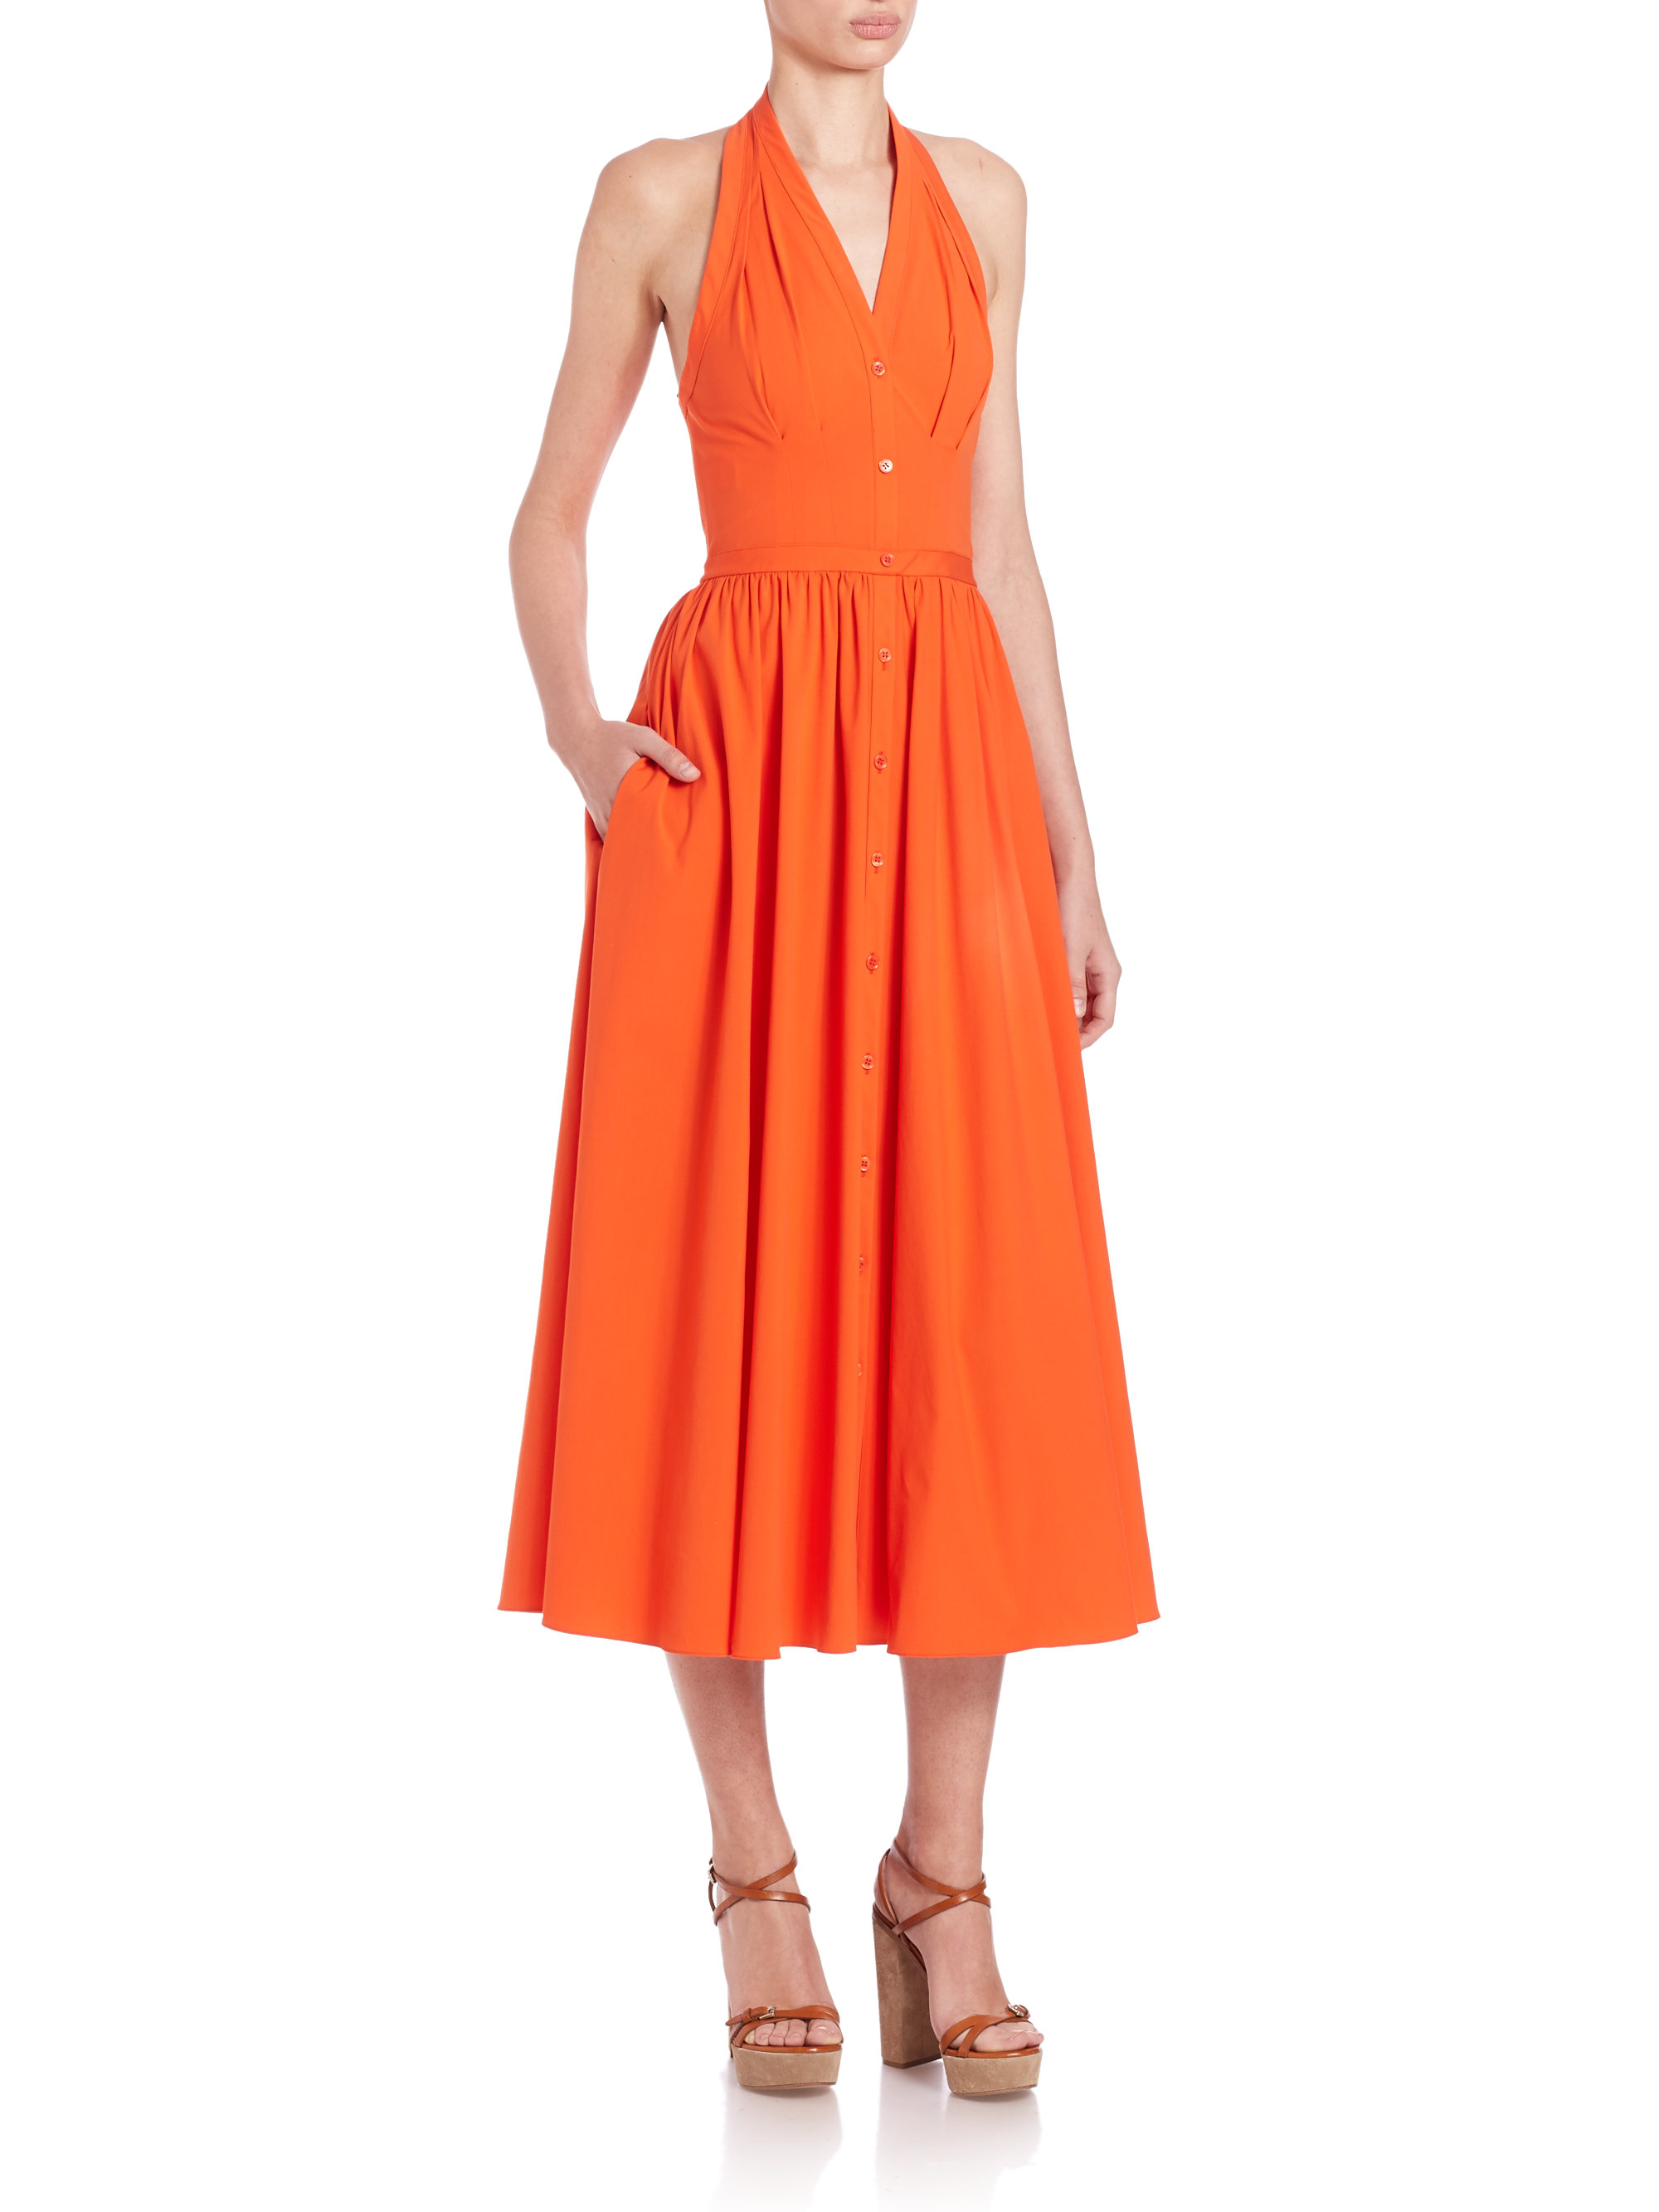 Michael Kors Cotton Poplin Halter Dress in Orange | Lyst